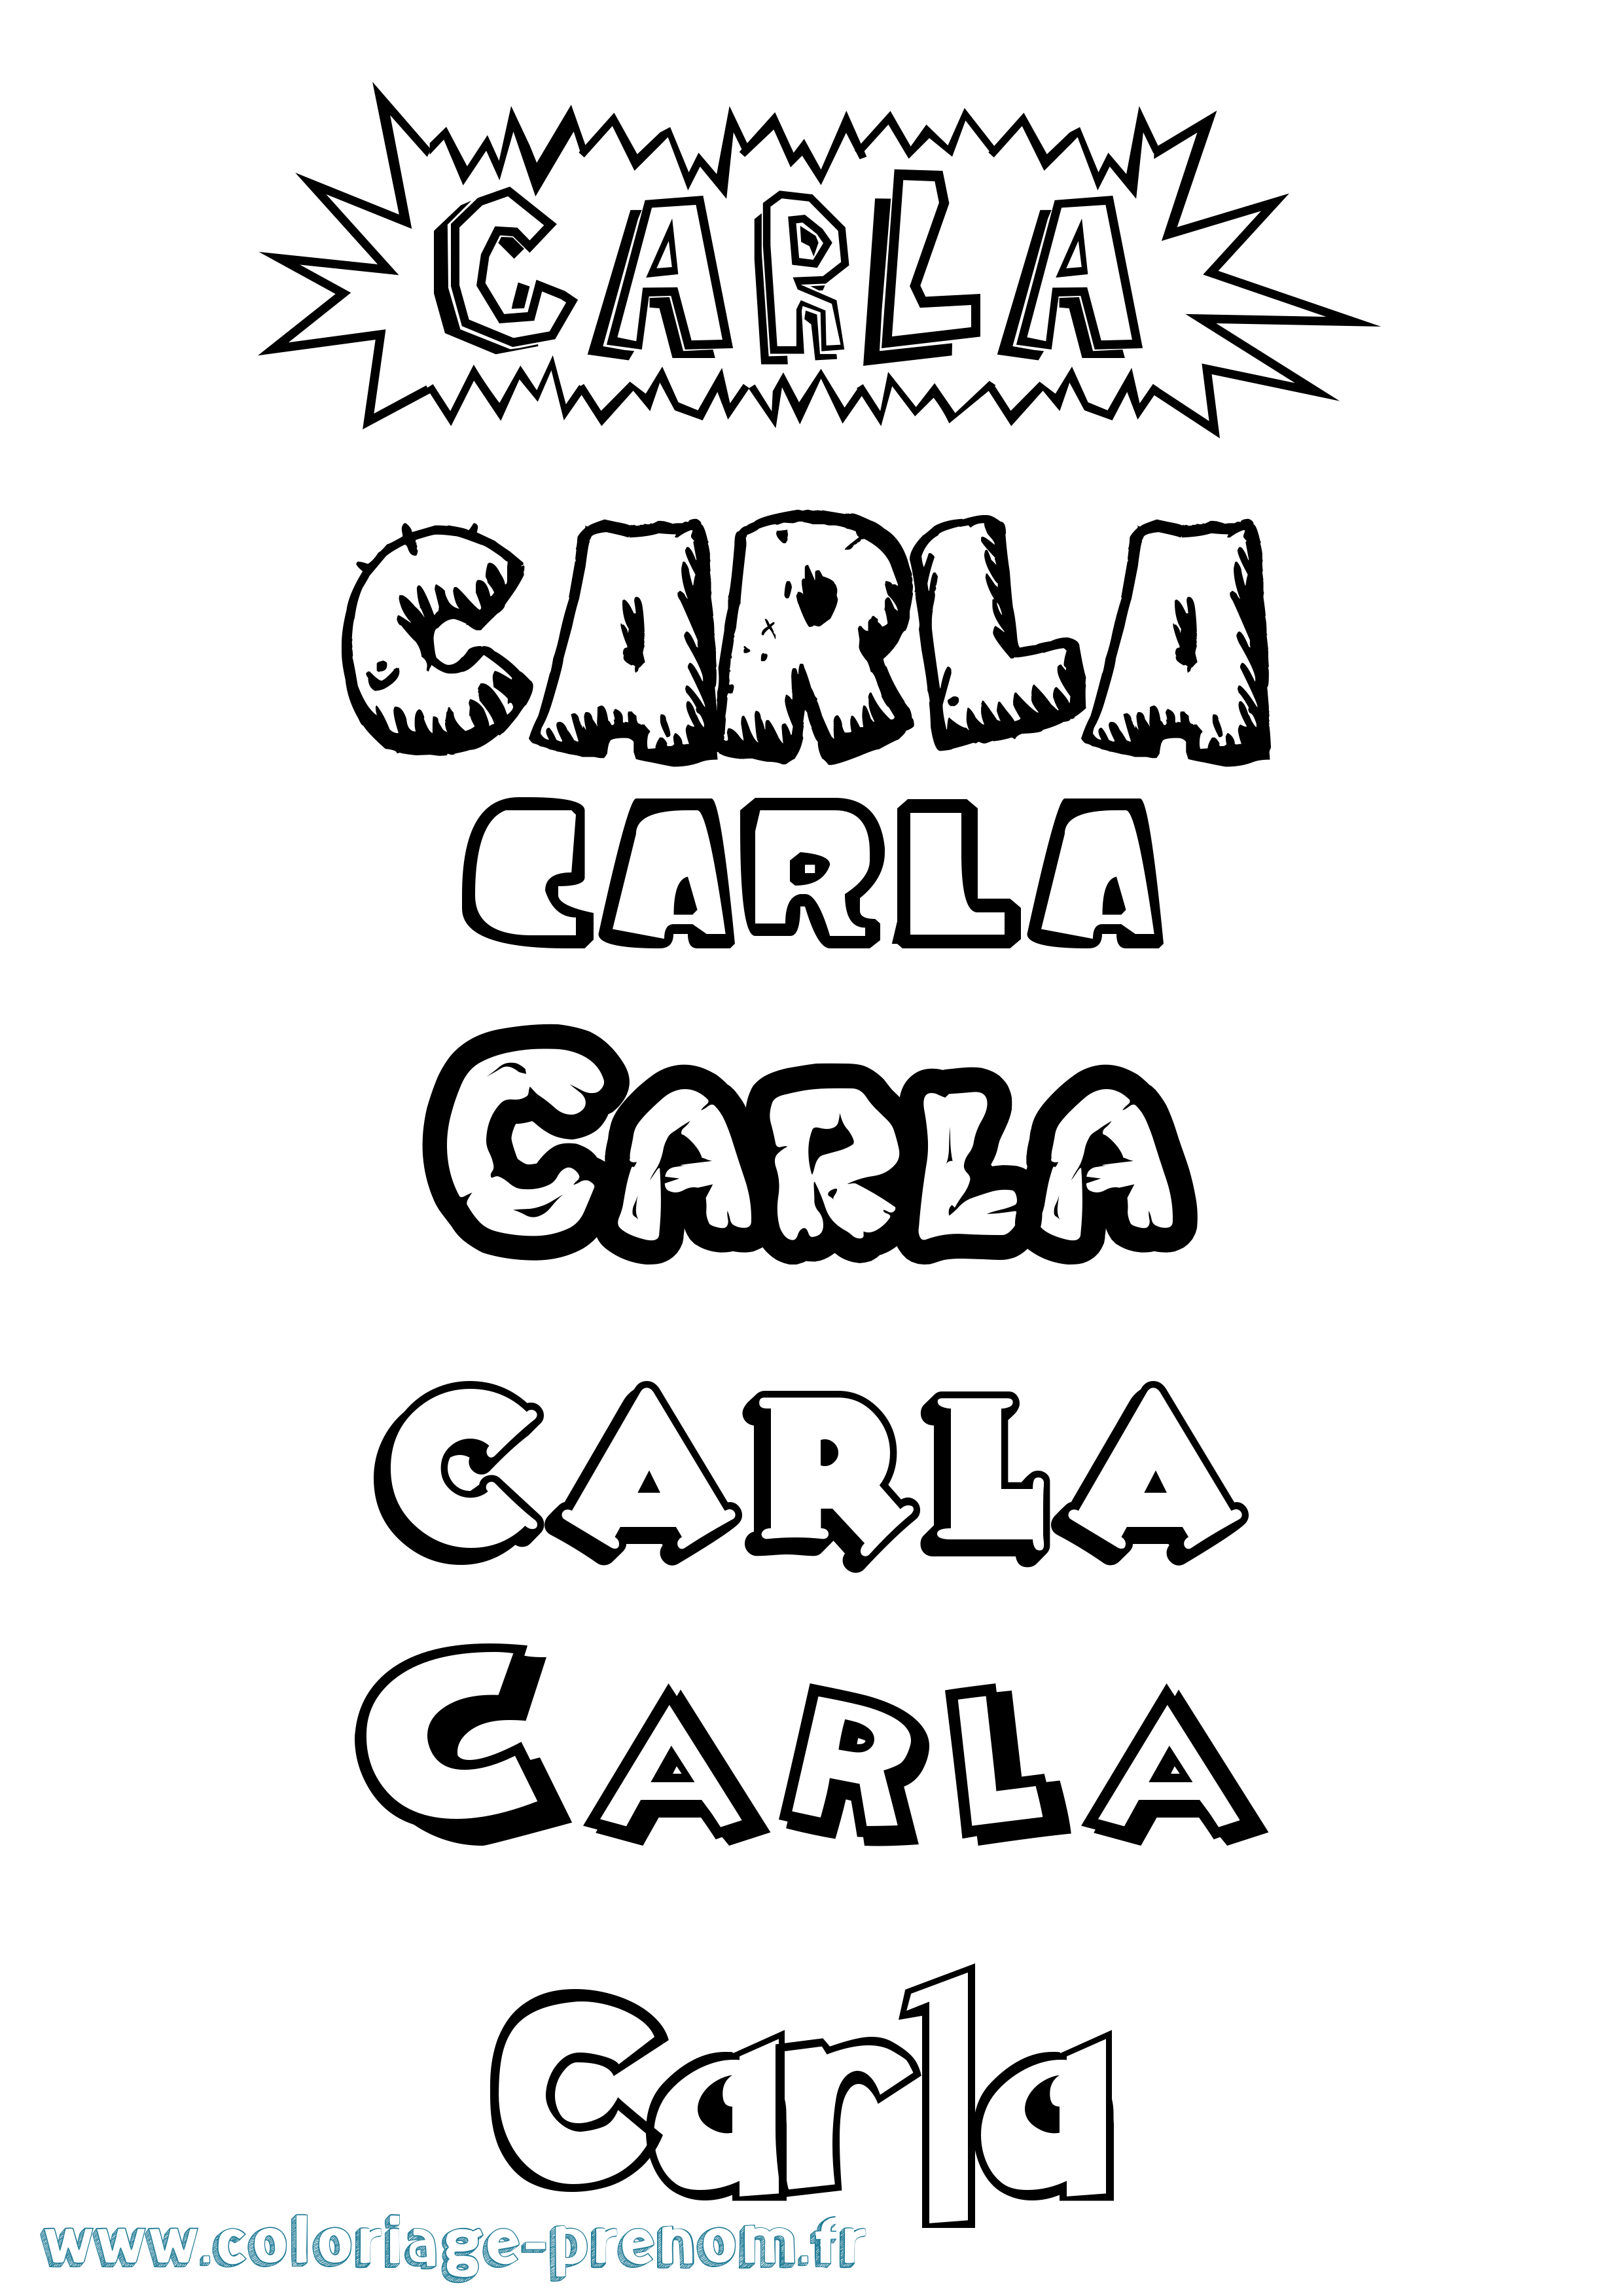 Coloriage prénom Carla